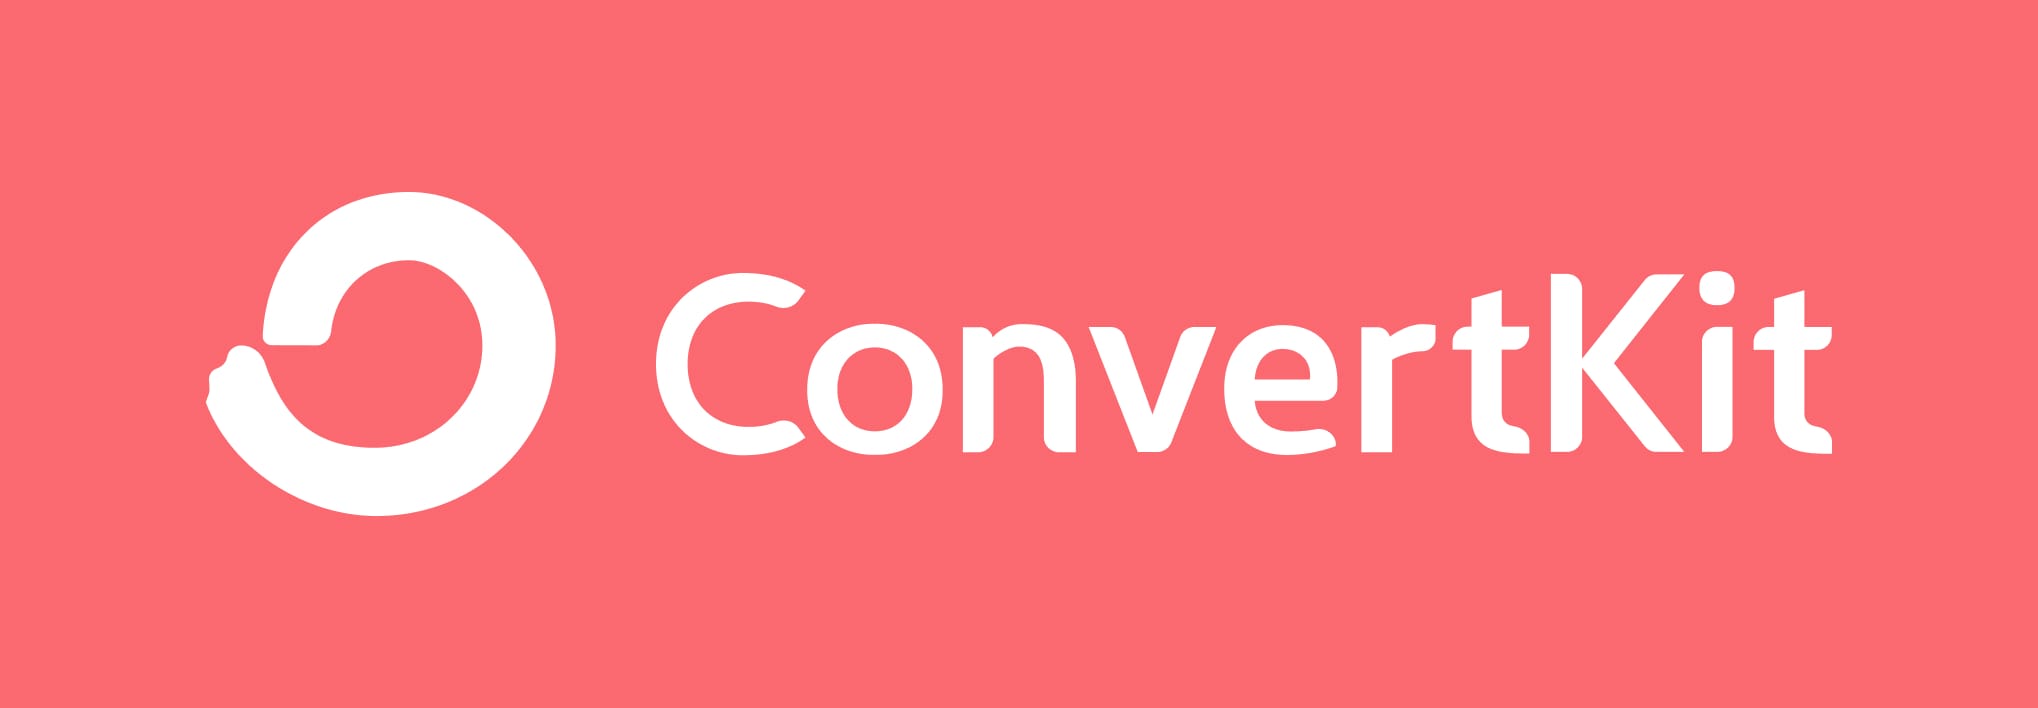 convertkit email marketing wordpress tool